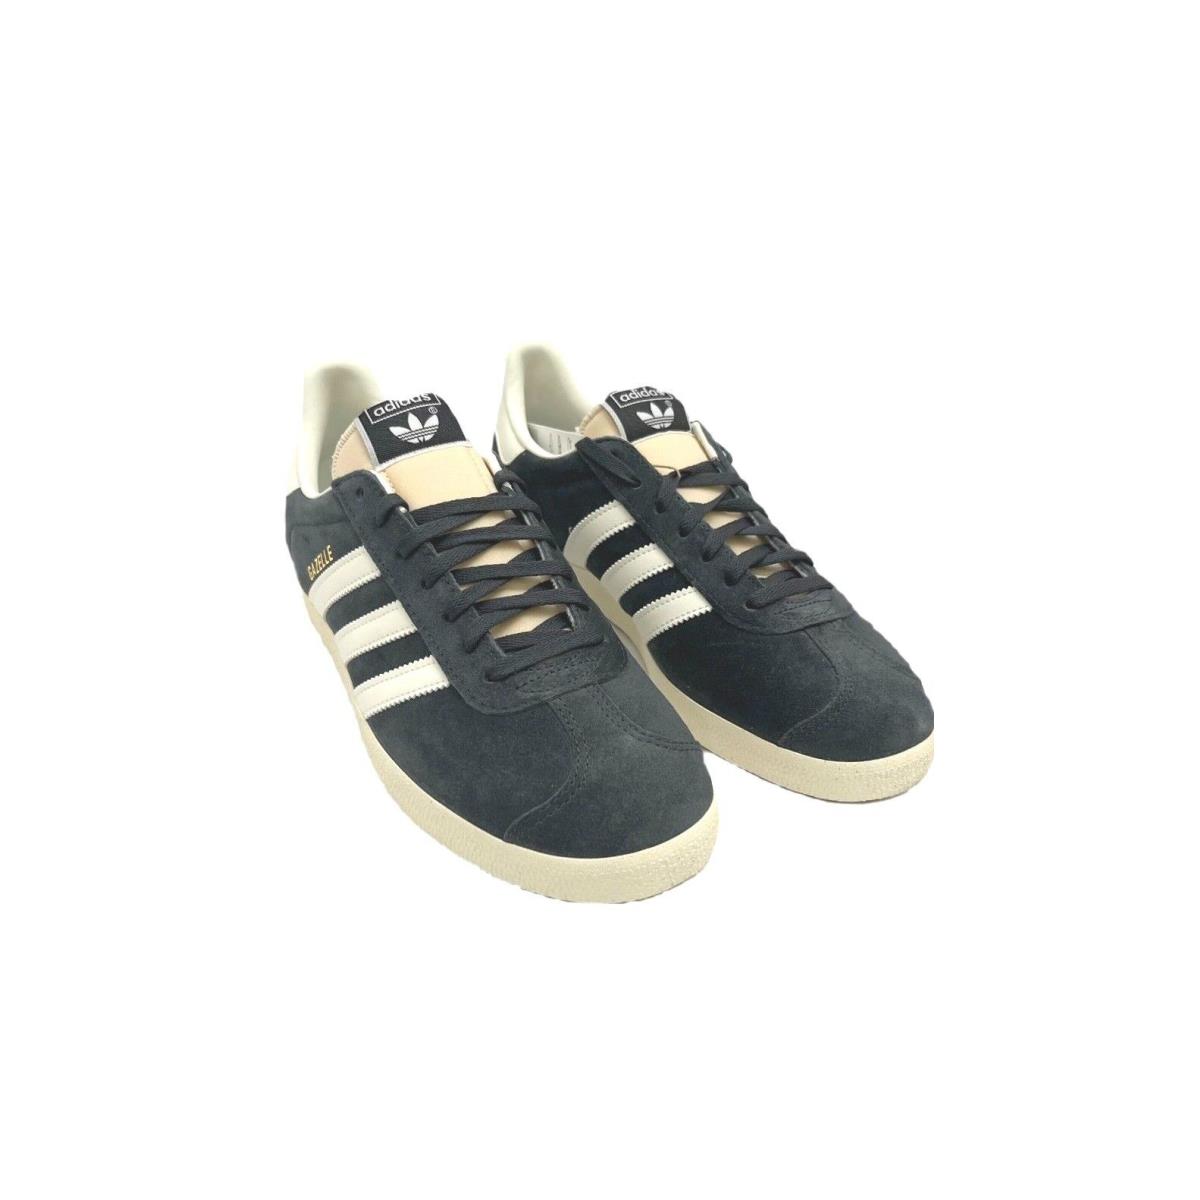 Adidas Men`s Gazelle Casual/activewear Shoes - Carbon/Off White/Cream White